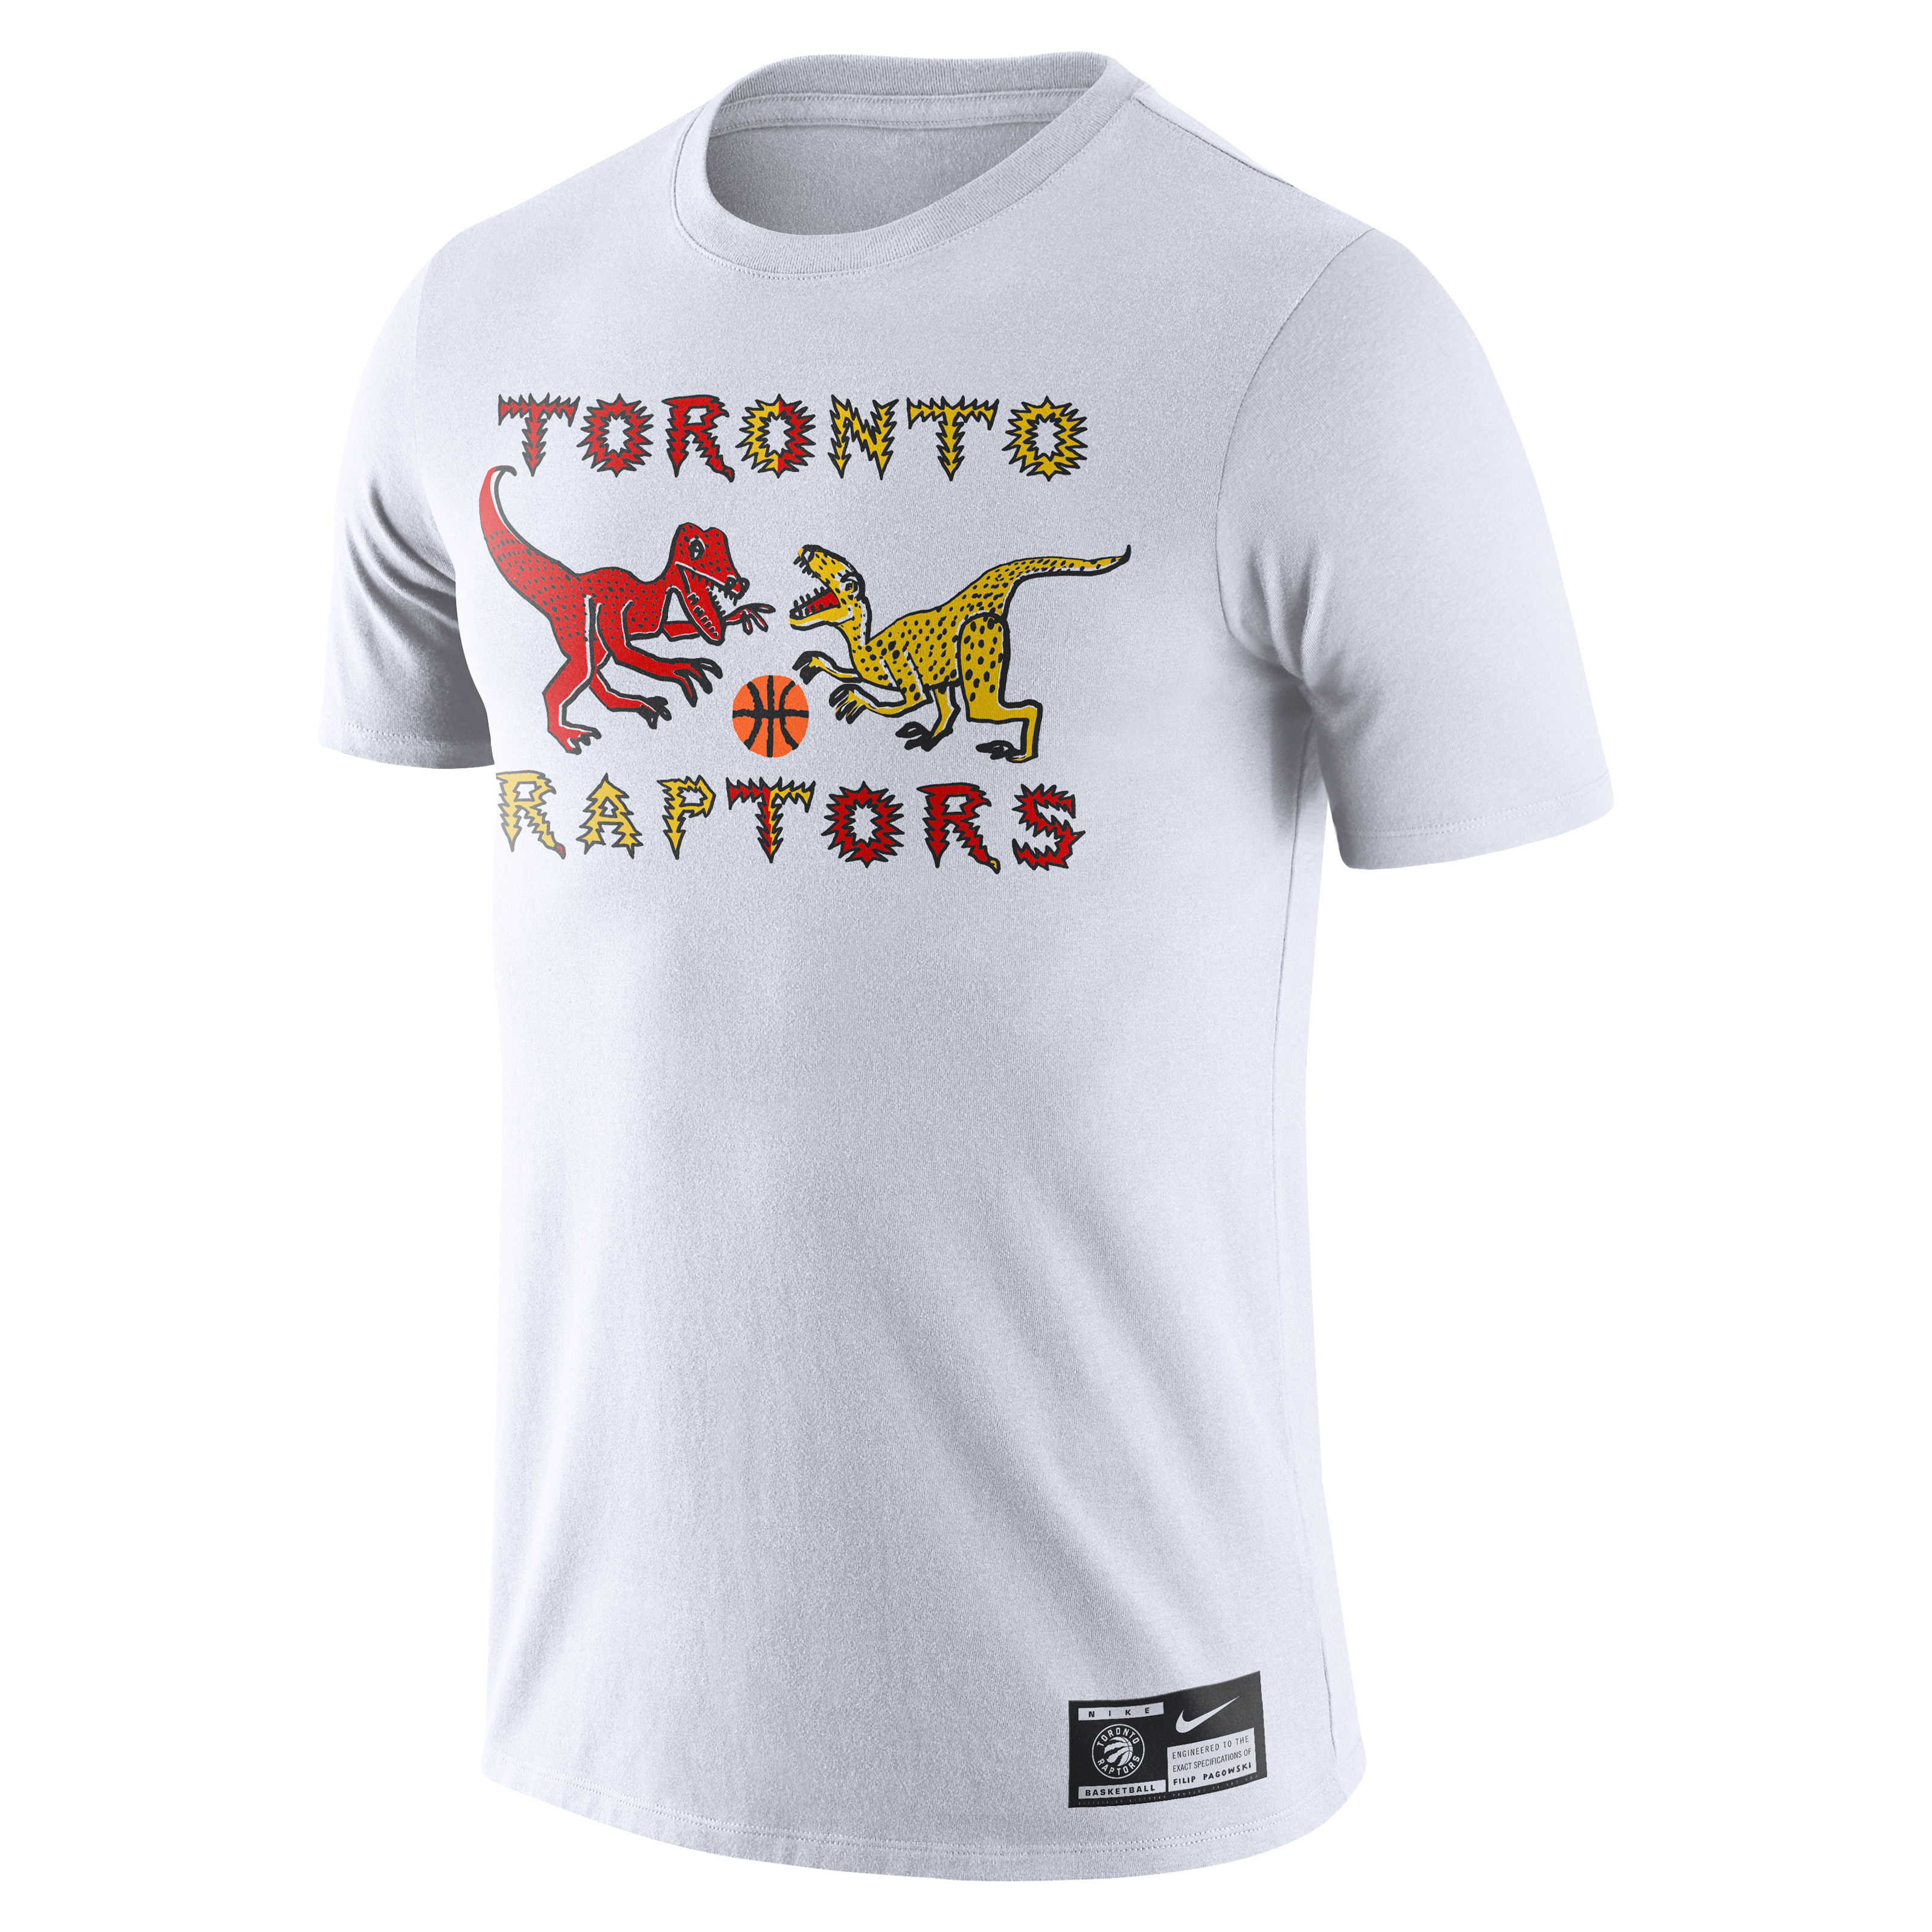 Filip Pagowski Nike T shirt &#x27;Toronto Raptors&#x27;